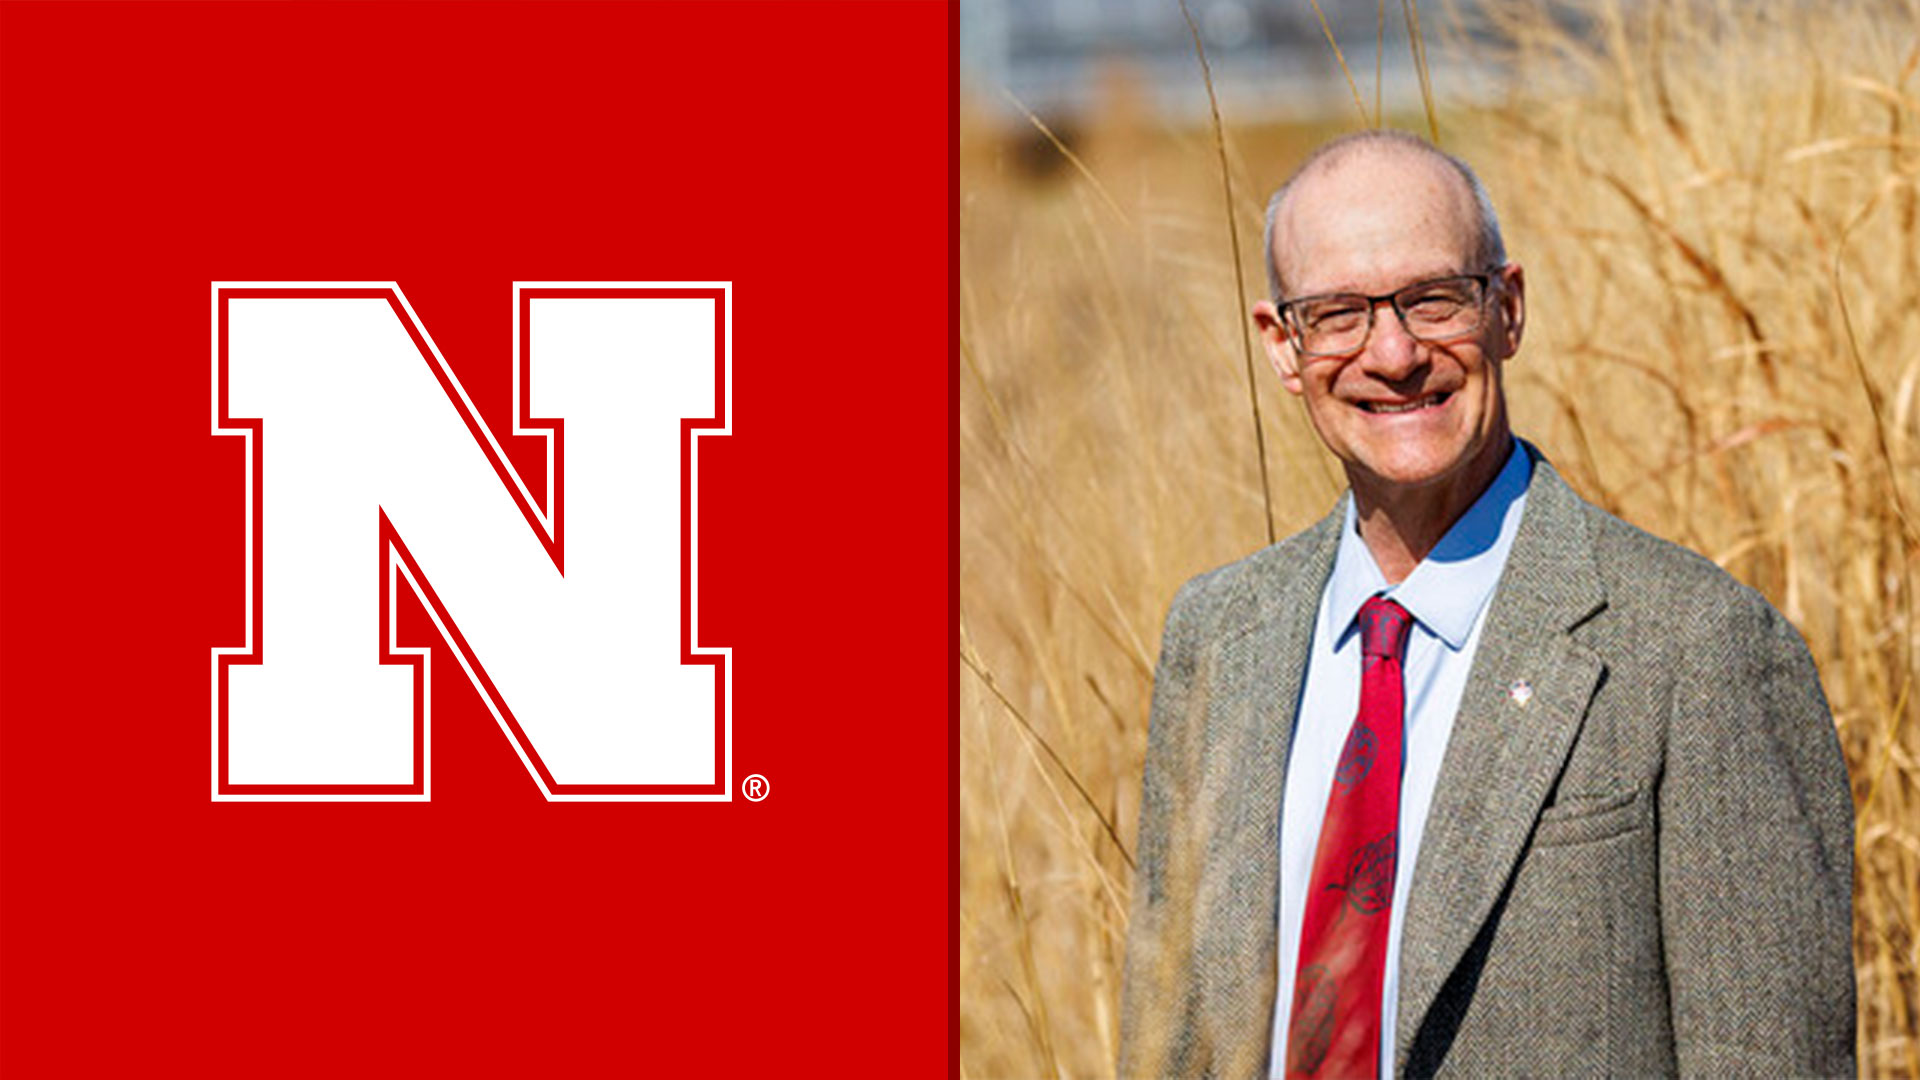 Robert Brooke photographed in front of native Nebraska prairie grasses; links to news story